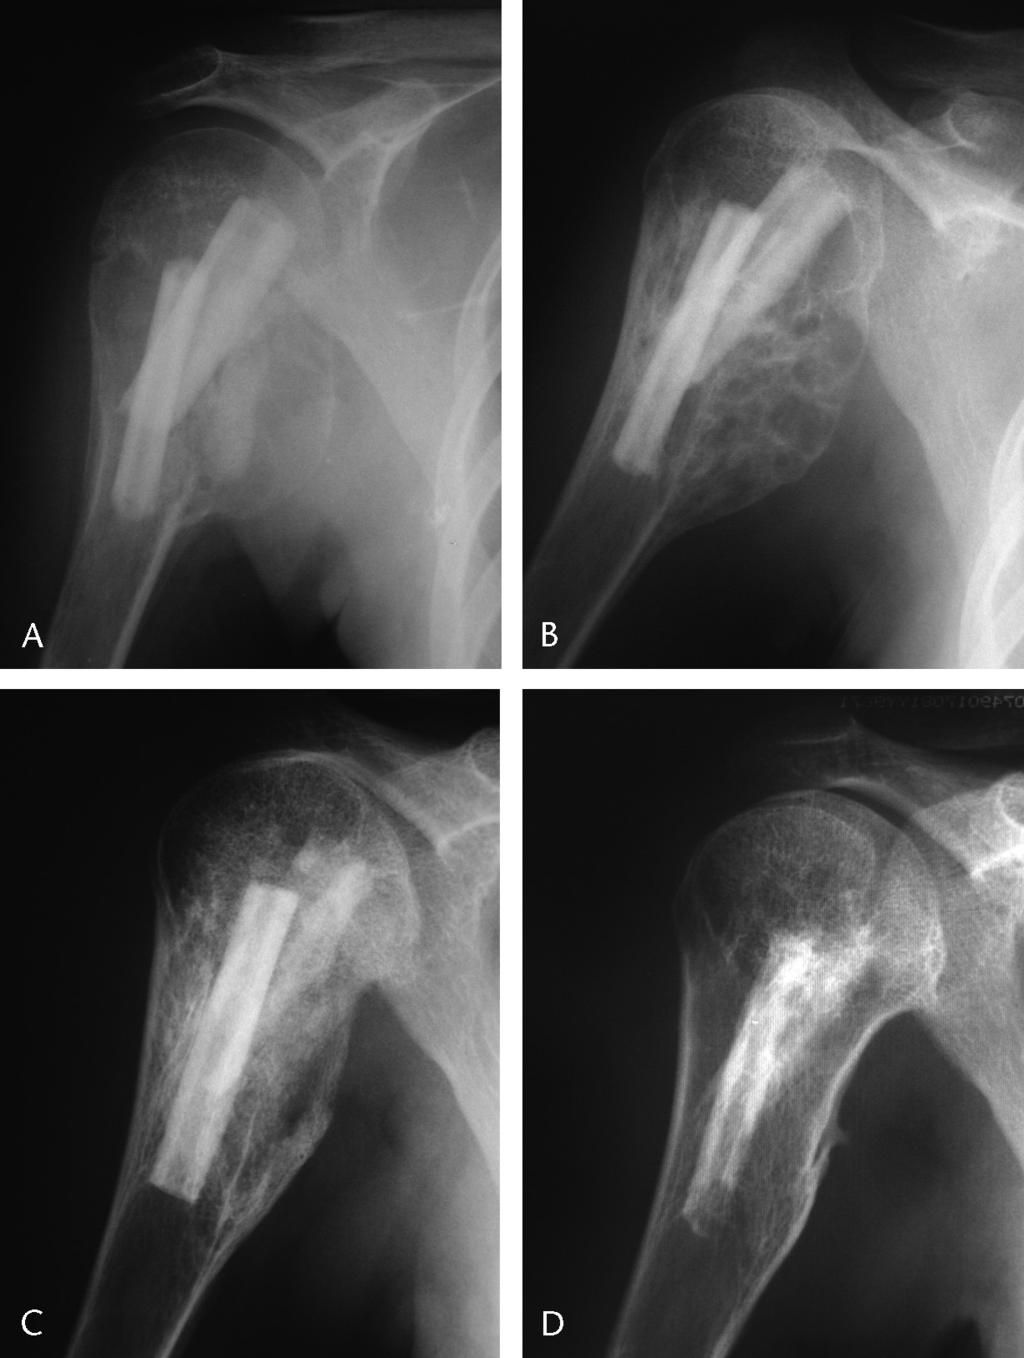 BazarNr etal J Pediatr Orthop & Volume 27, Number 8, December 2007 grafts, and occasionally with bone cement.